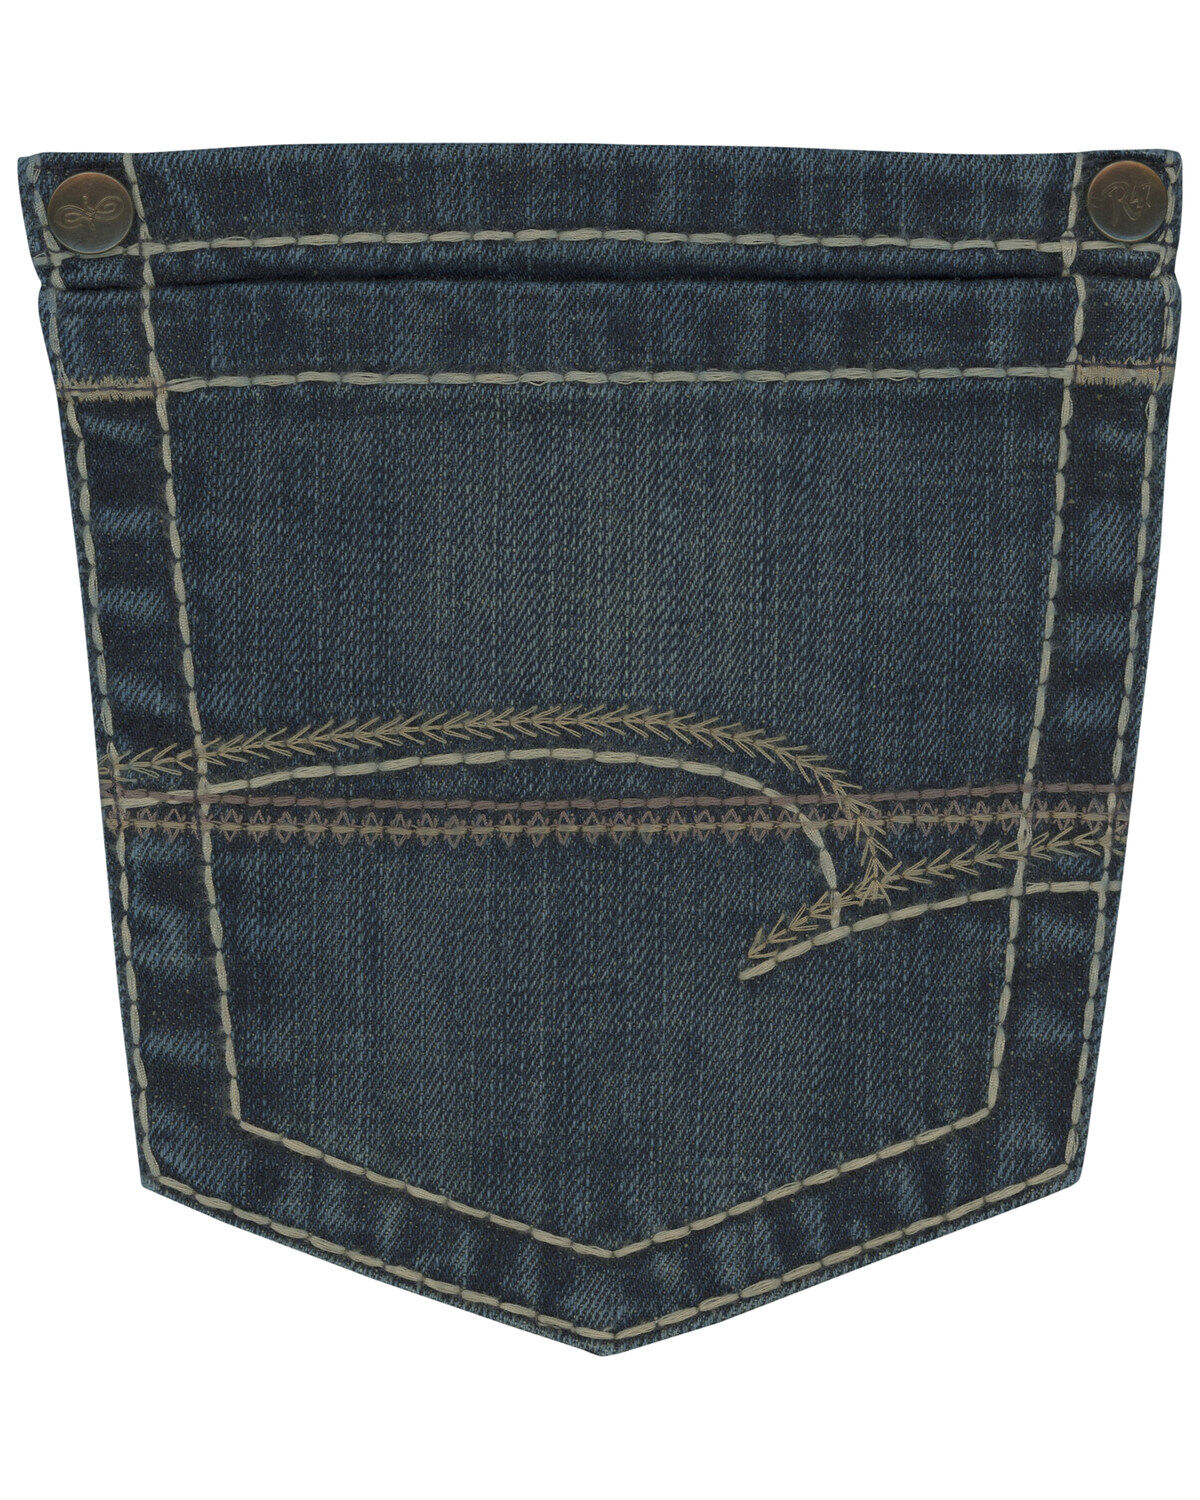 Wrangler Rock 47 Jeans Size Chart